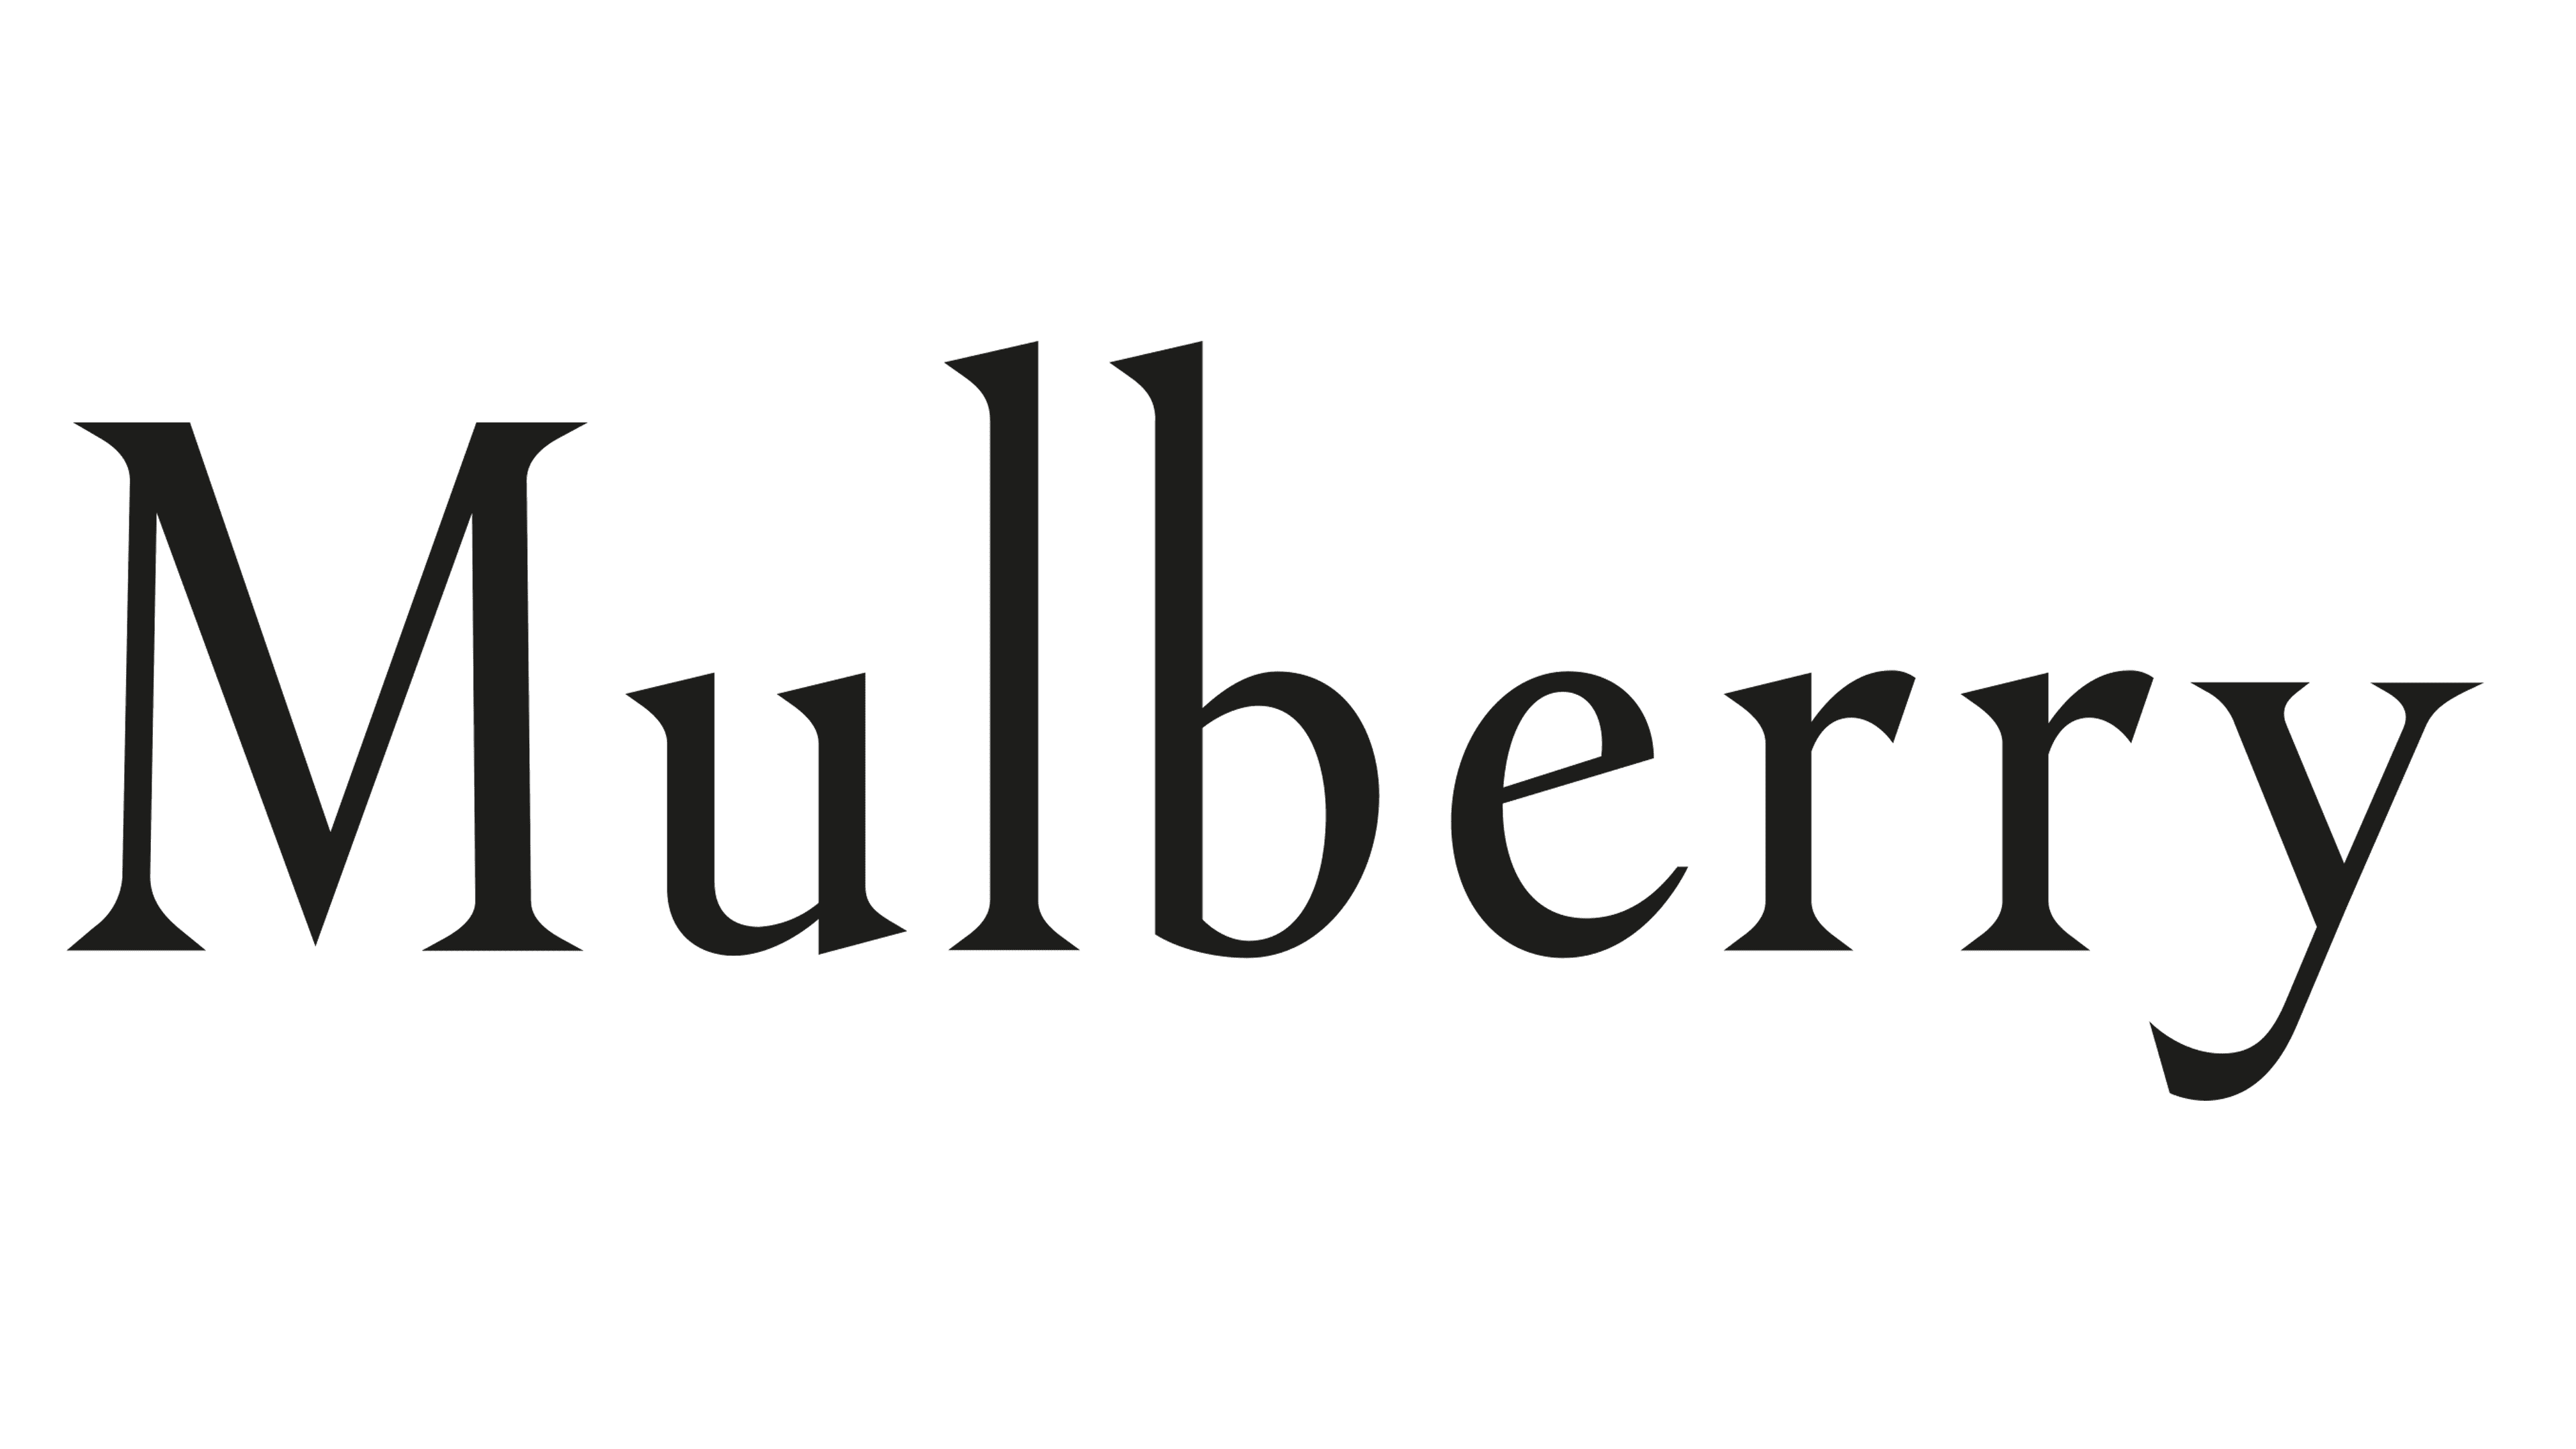 Free Mulberry Logo Designs